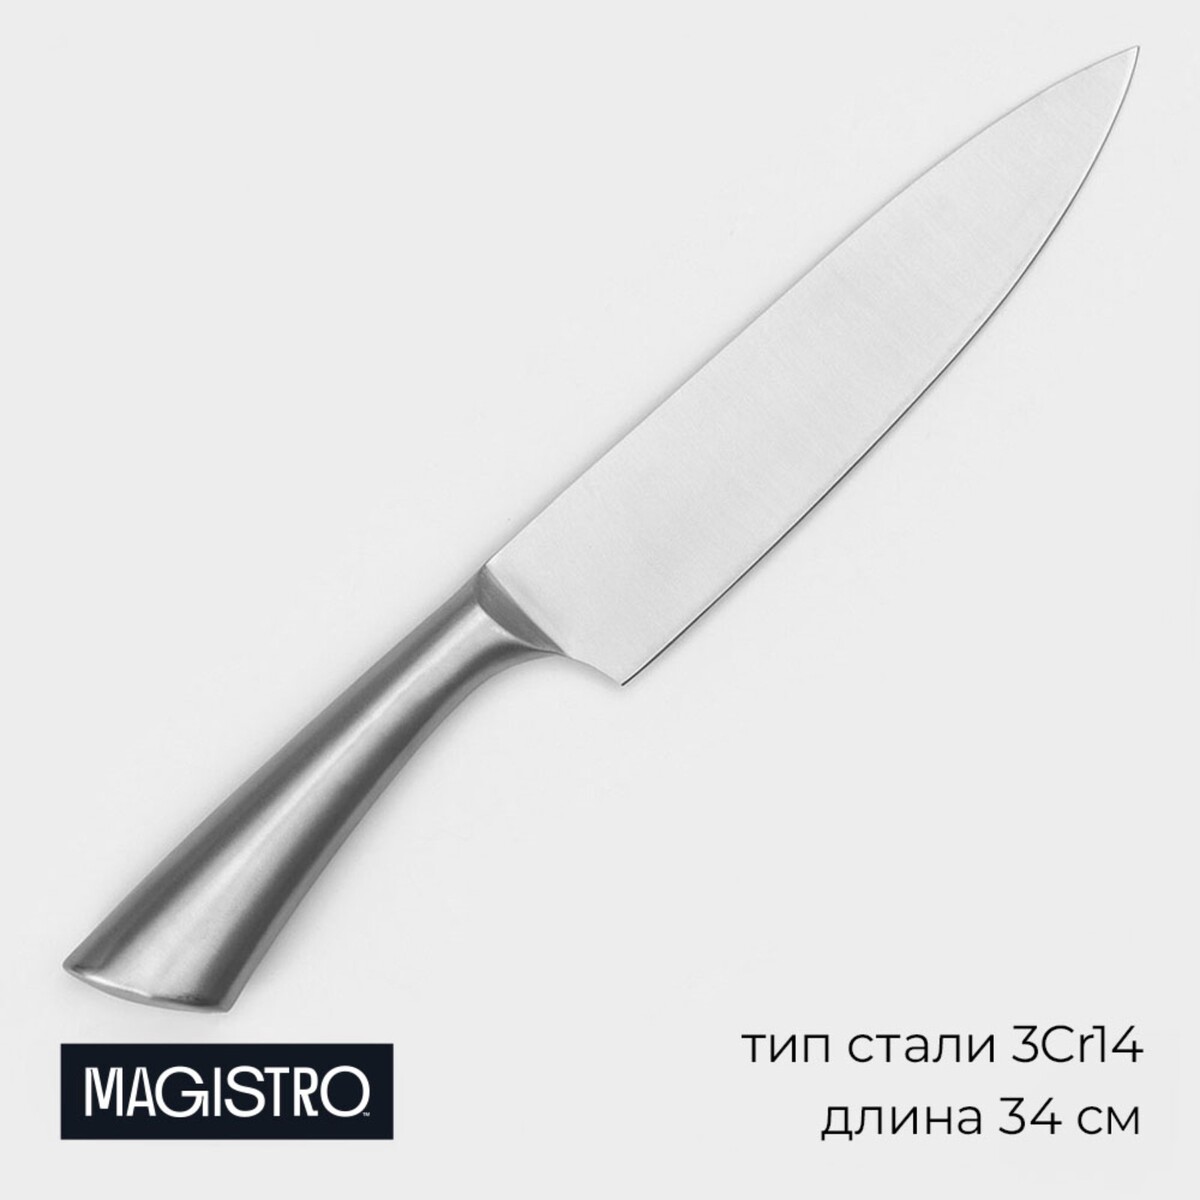 Нож - шеф magistro ardone, лезвие 20 см, цвет серебристый нож для овощей magistro ardone лезвие 8 5 см